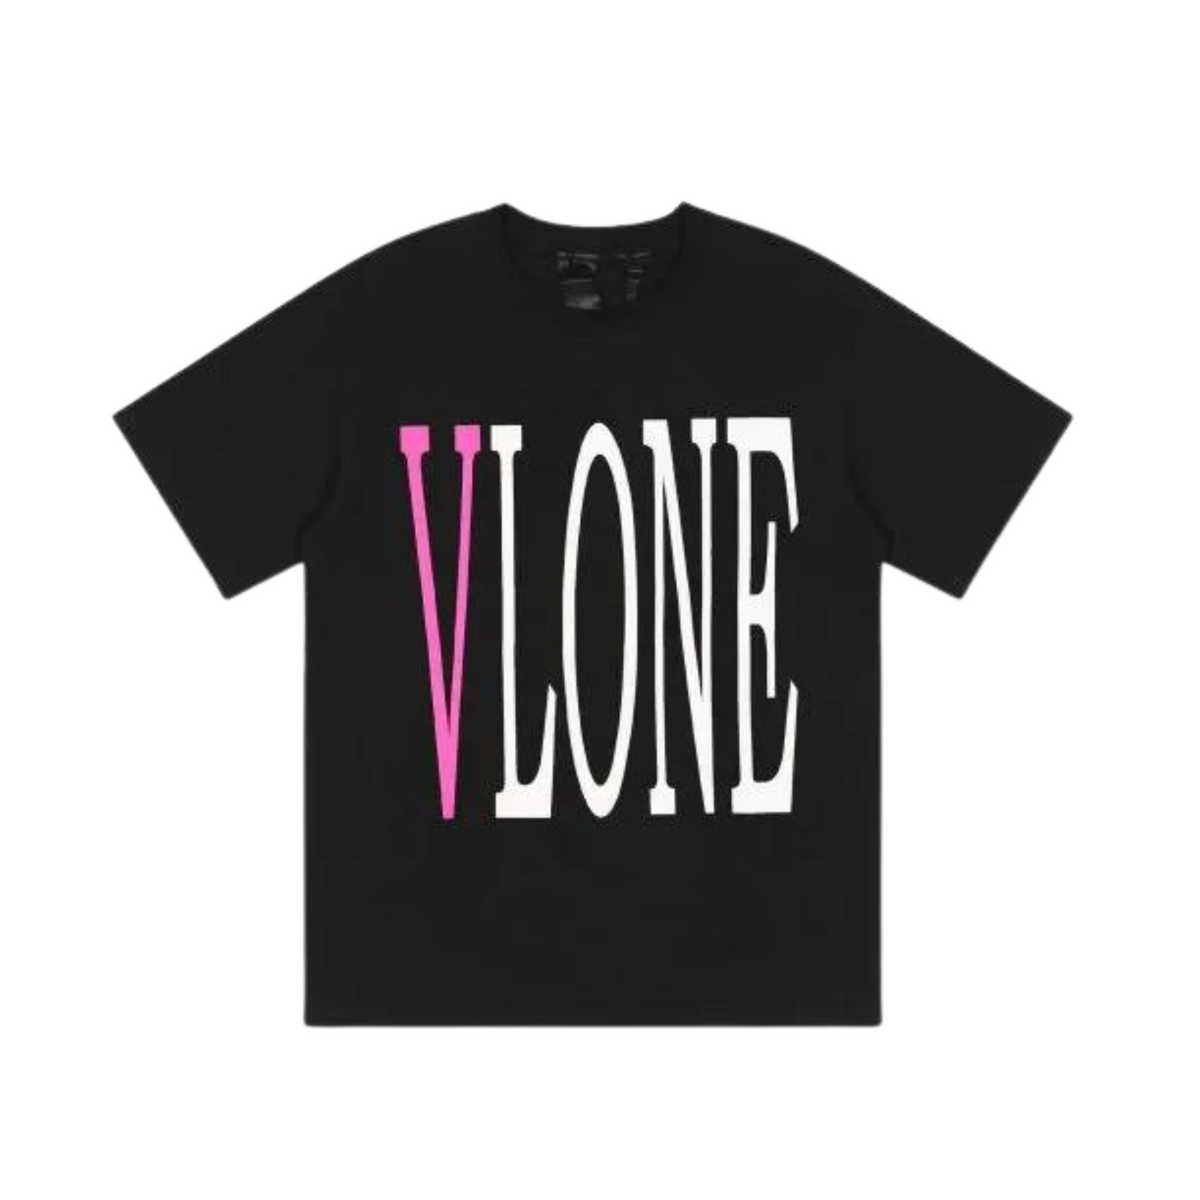 Vlone Staple T-shirt "Black/Pink"